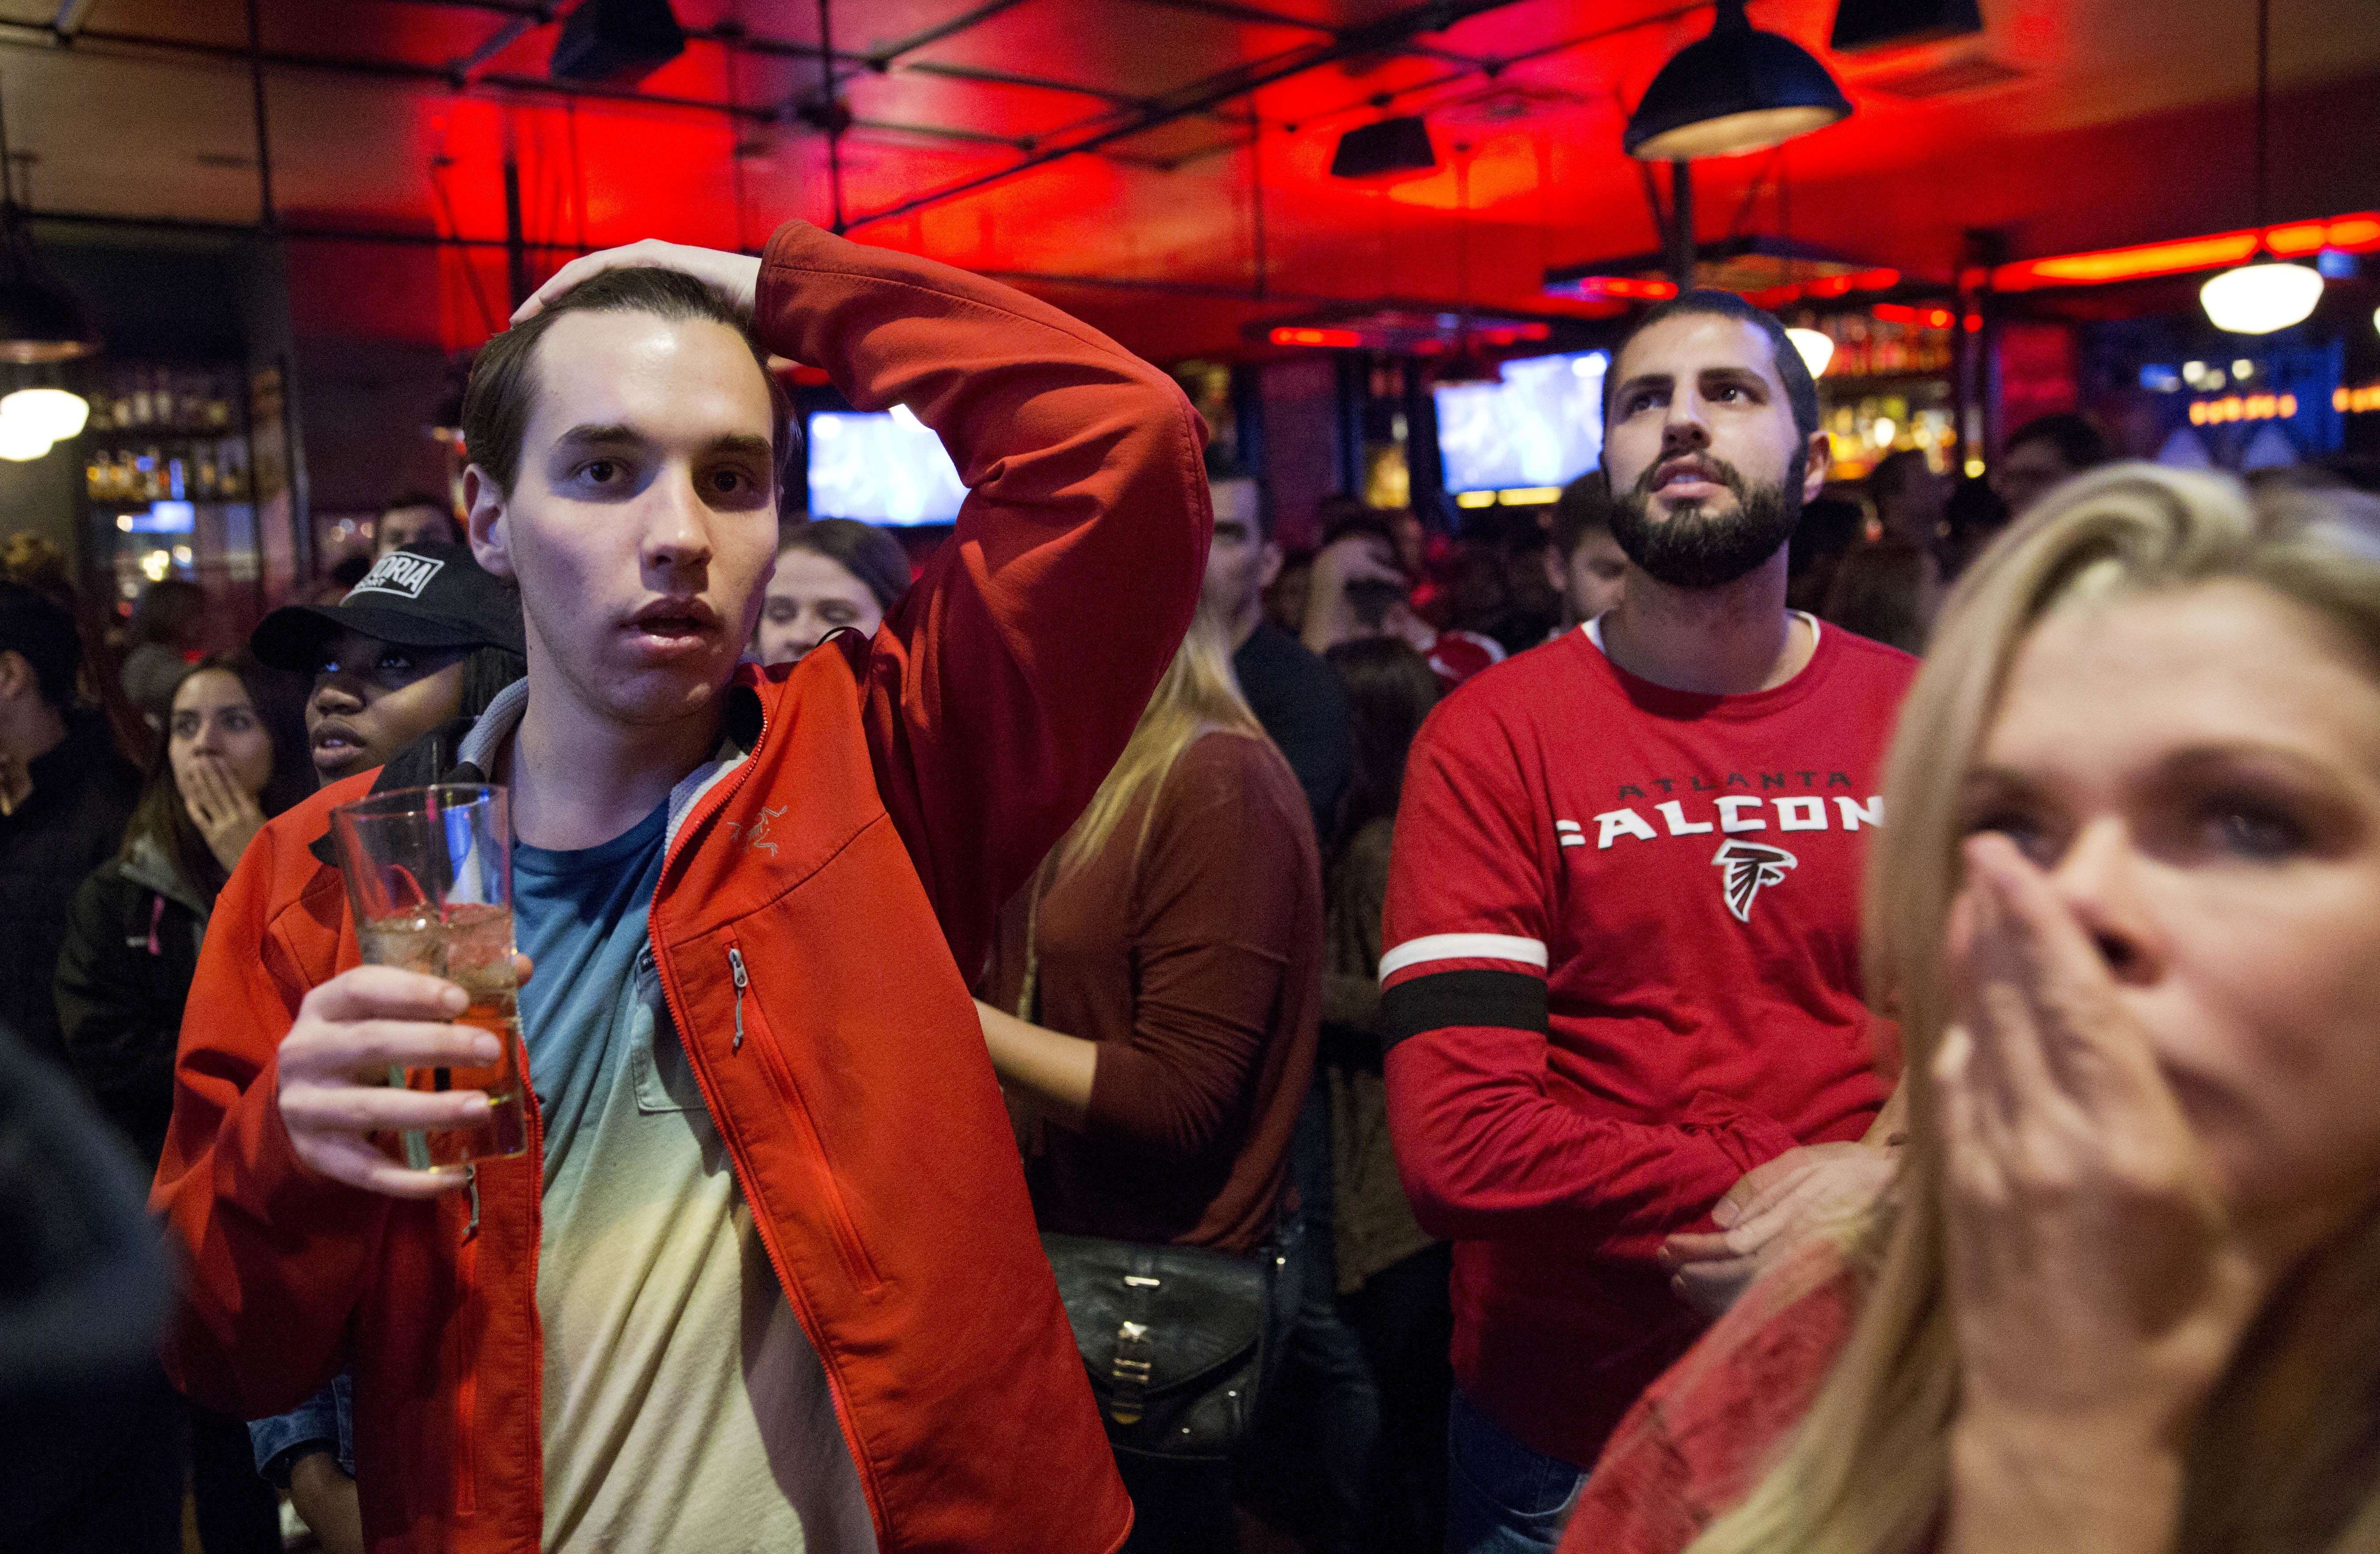 Atlanta Falcons fans react after the New England Patriots win Super Bowl 51. Photo: AP